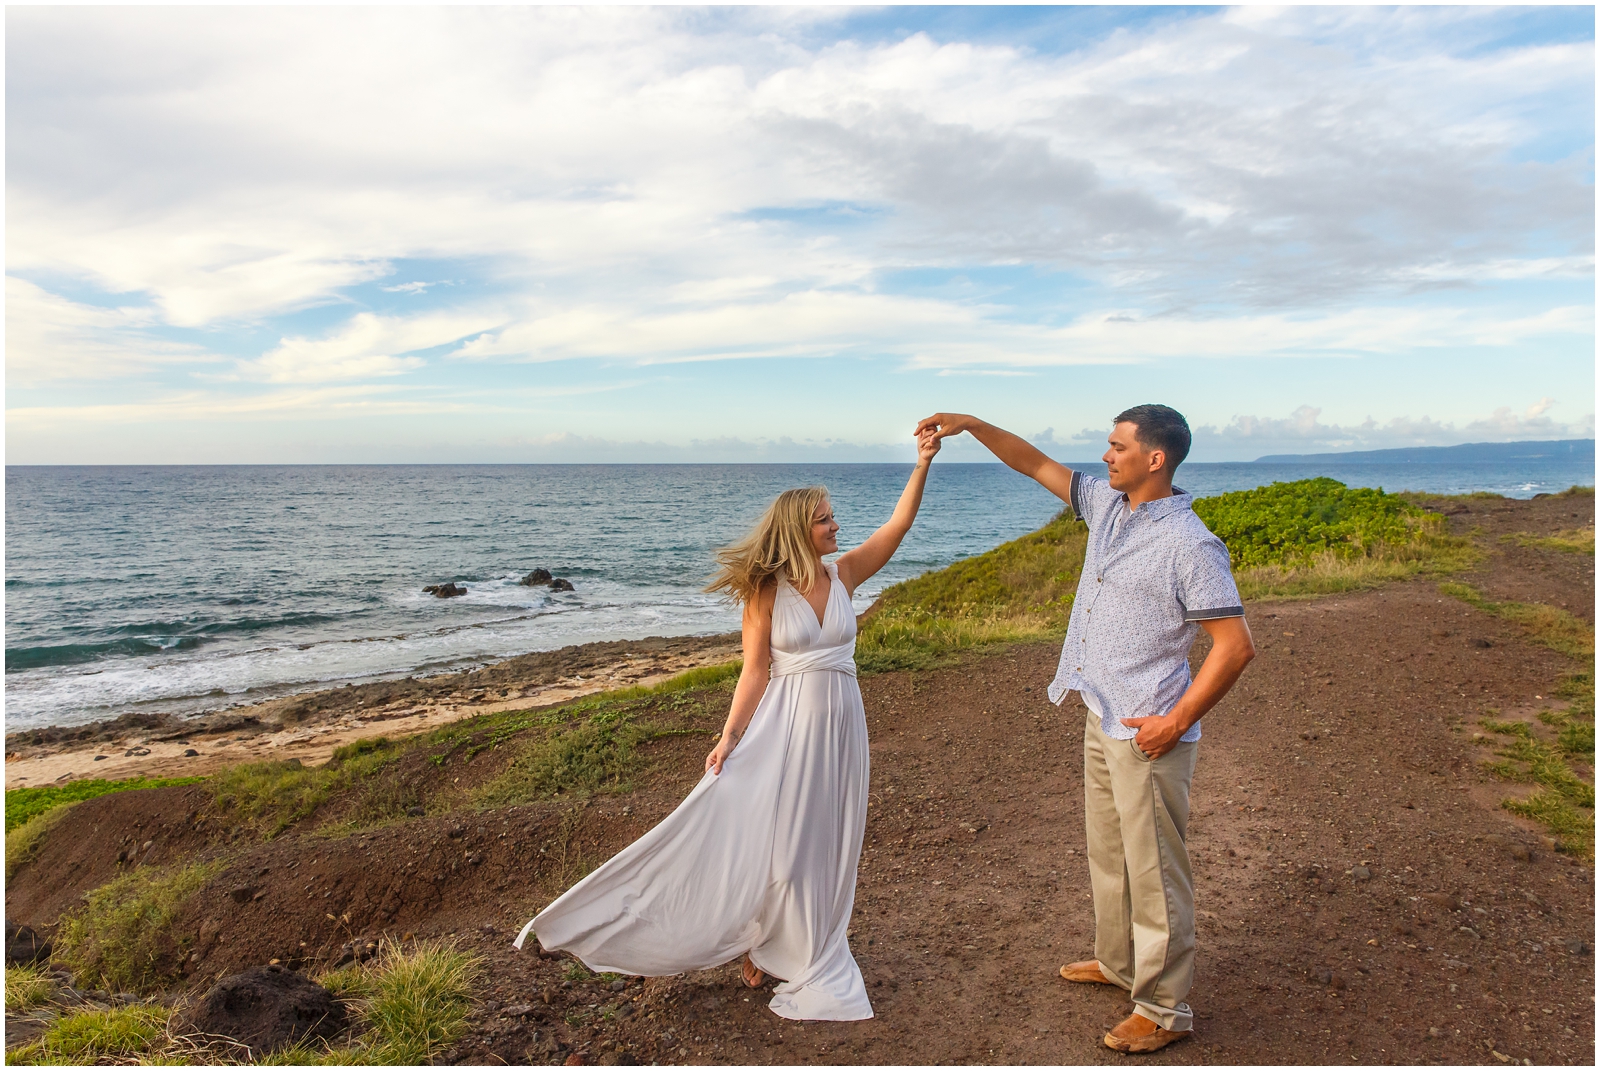 Couple dancing on the beach during their Hawaiian destination wedding.